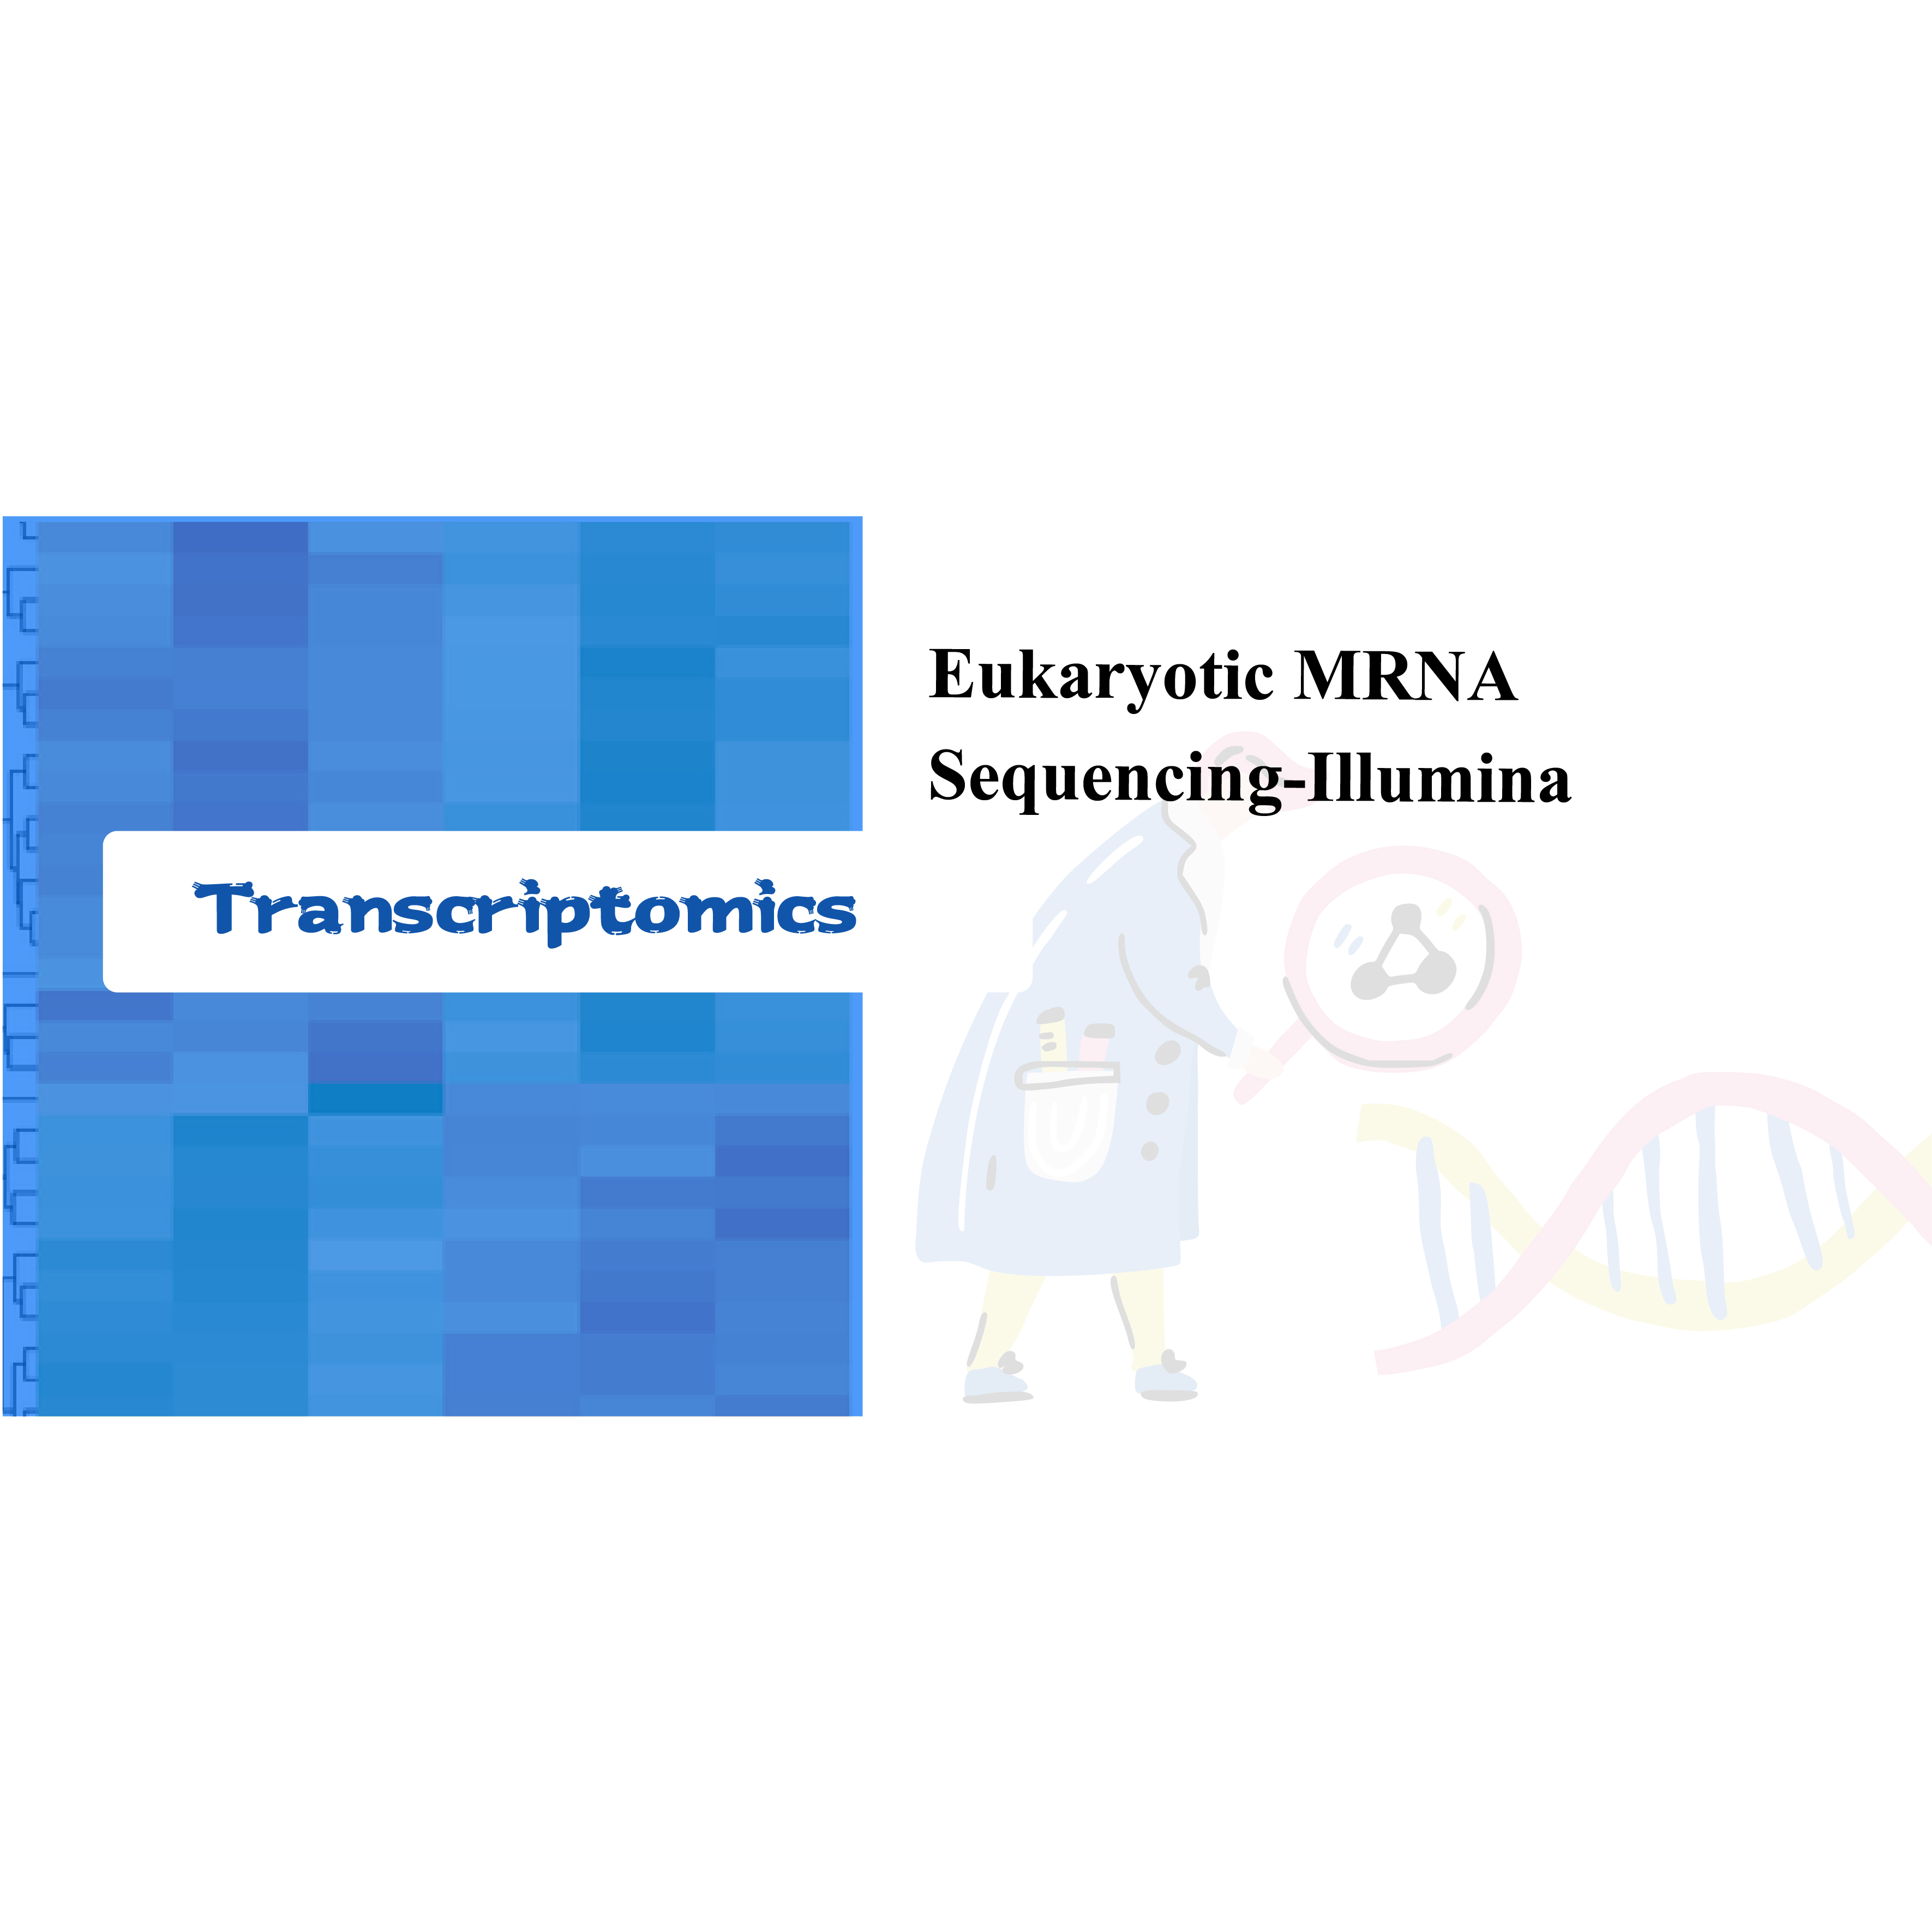 Eukaryotic mRNA Sequencing-Illumina